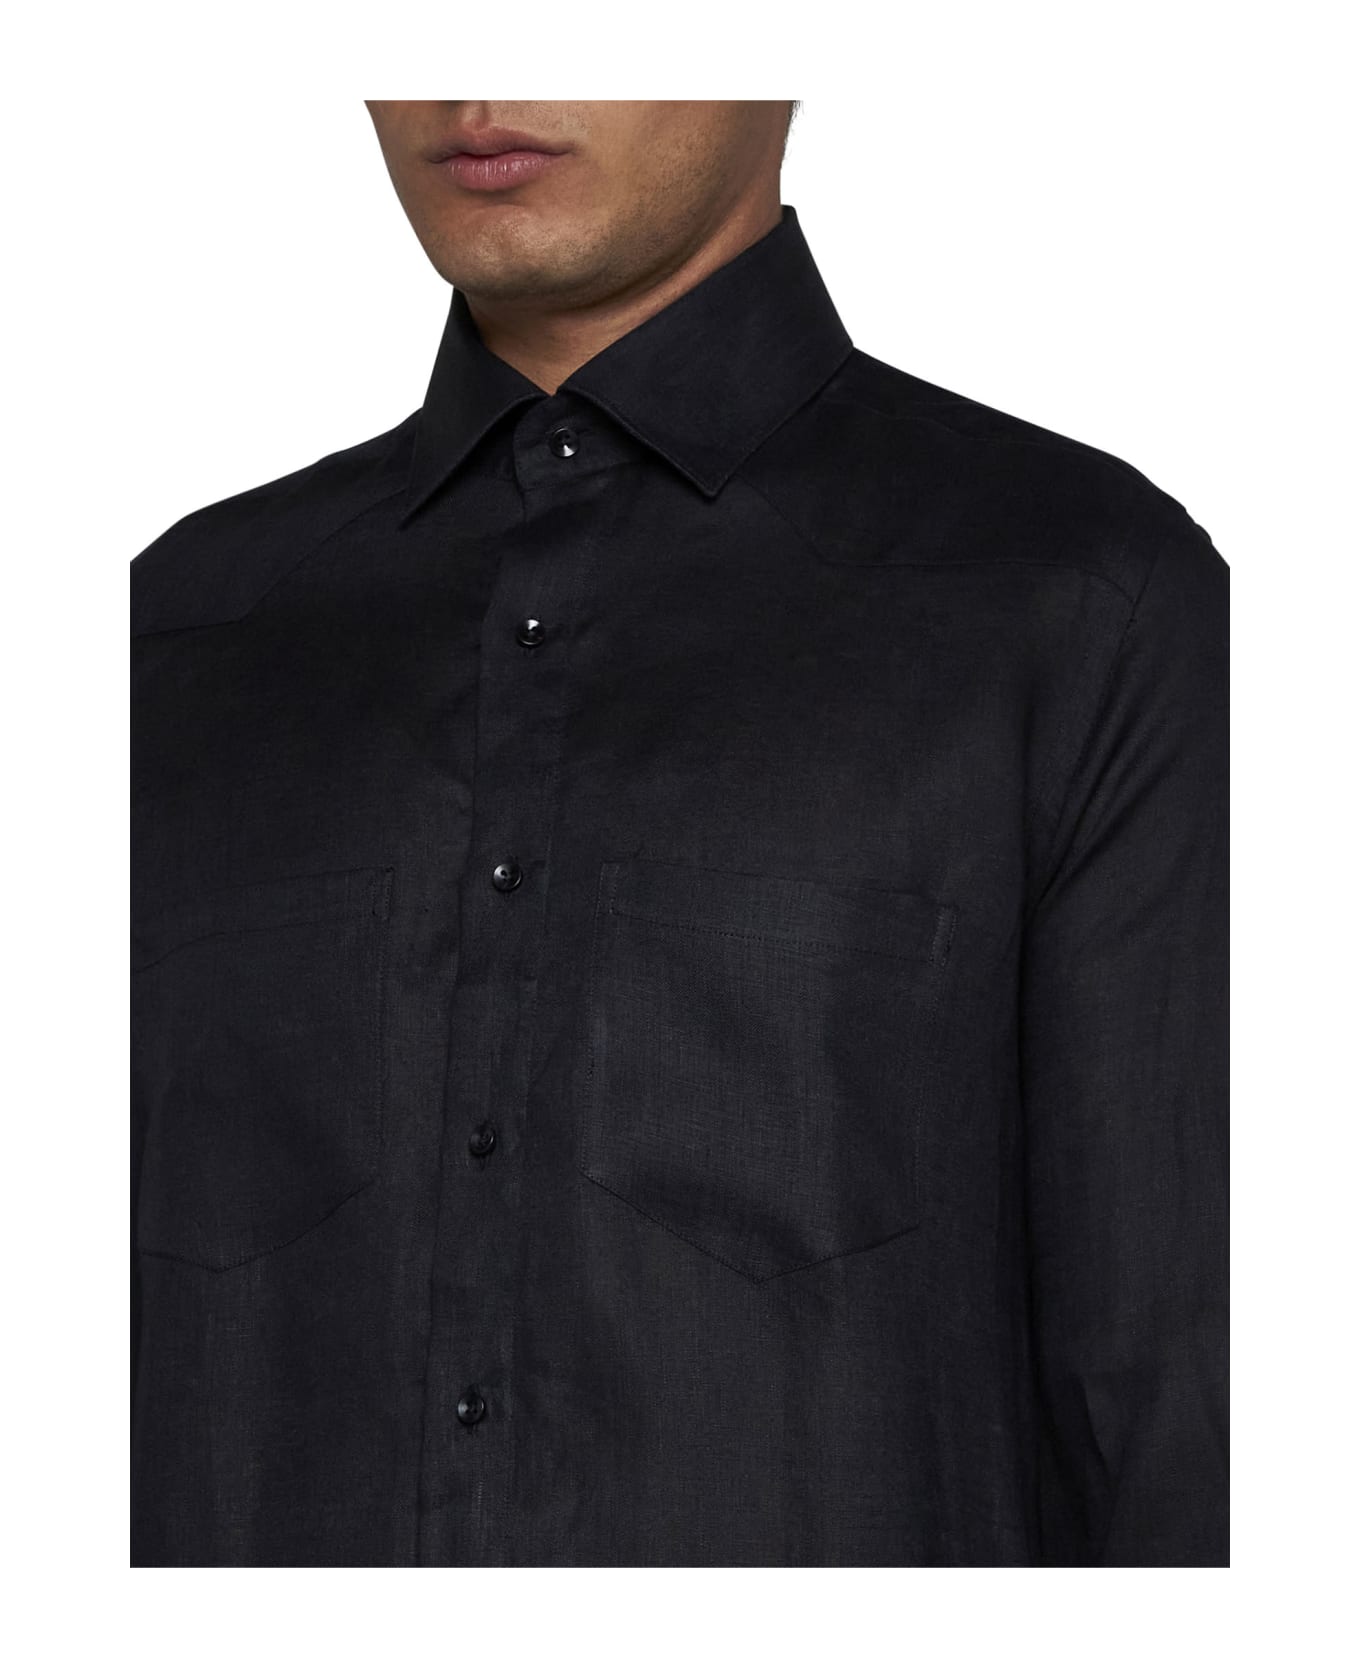 Low Brand Shirt - Jet black